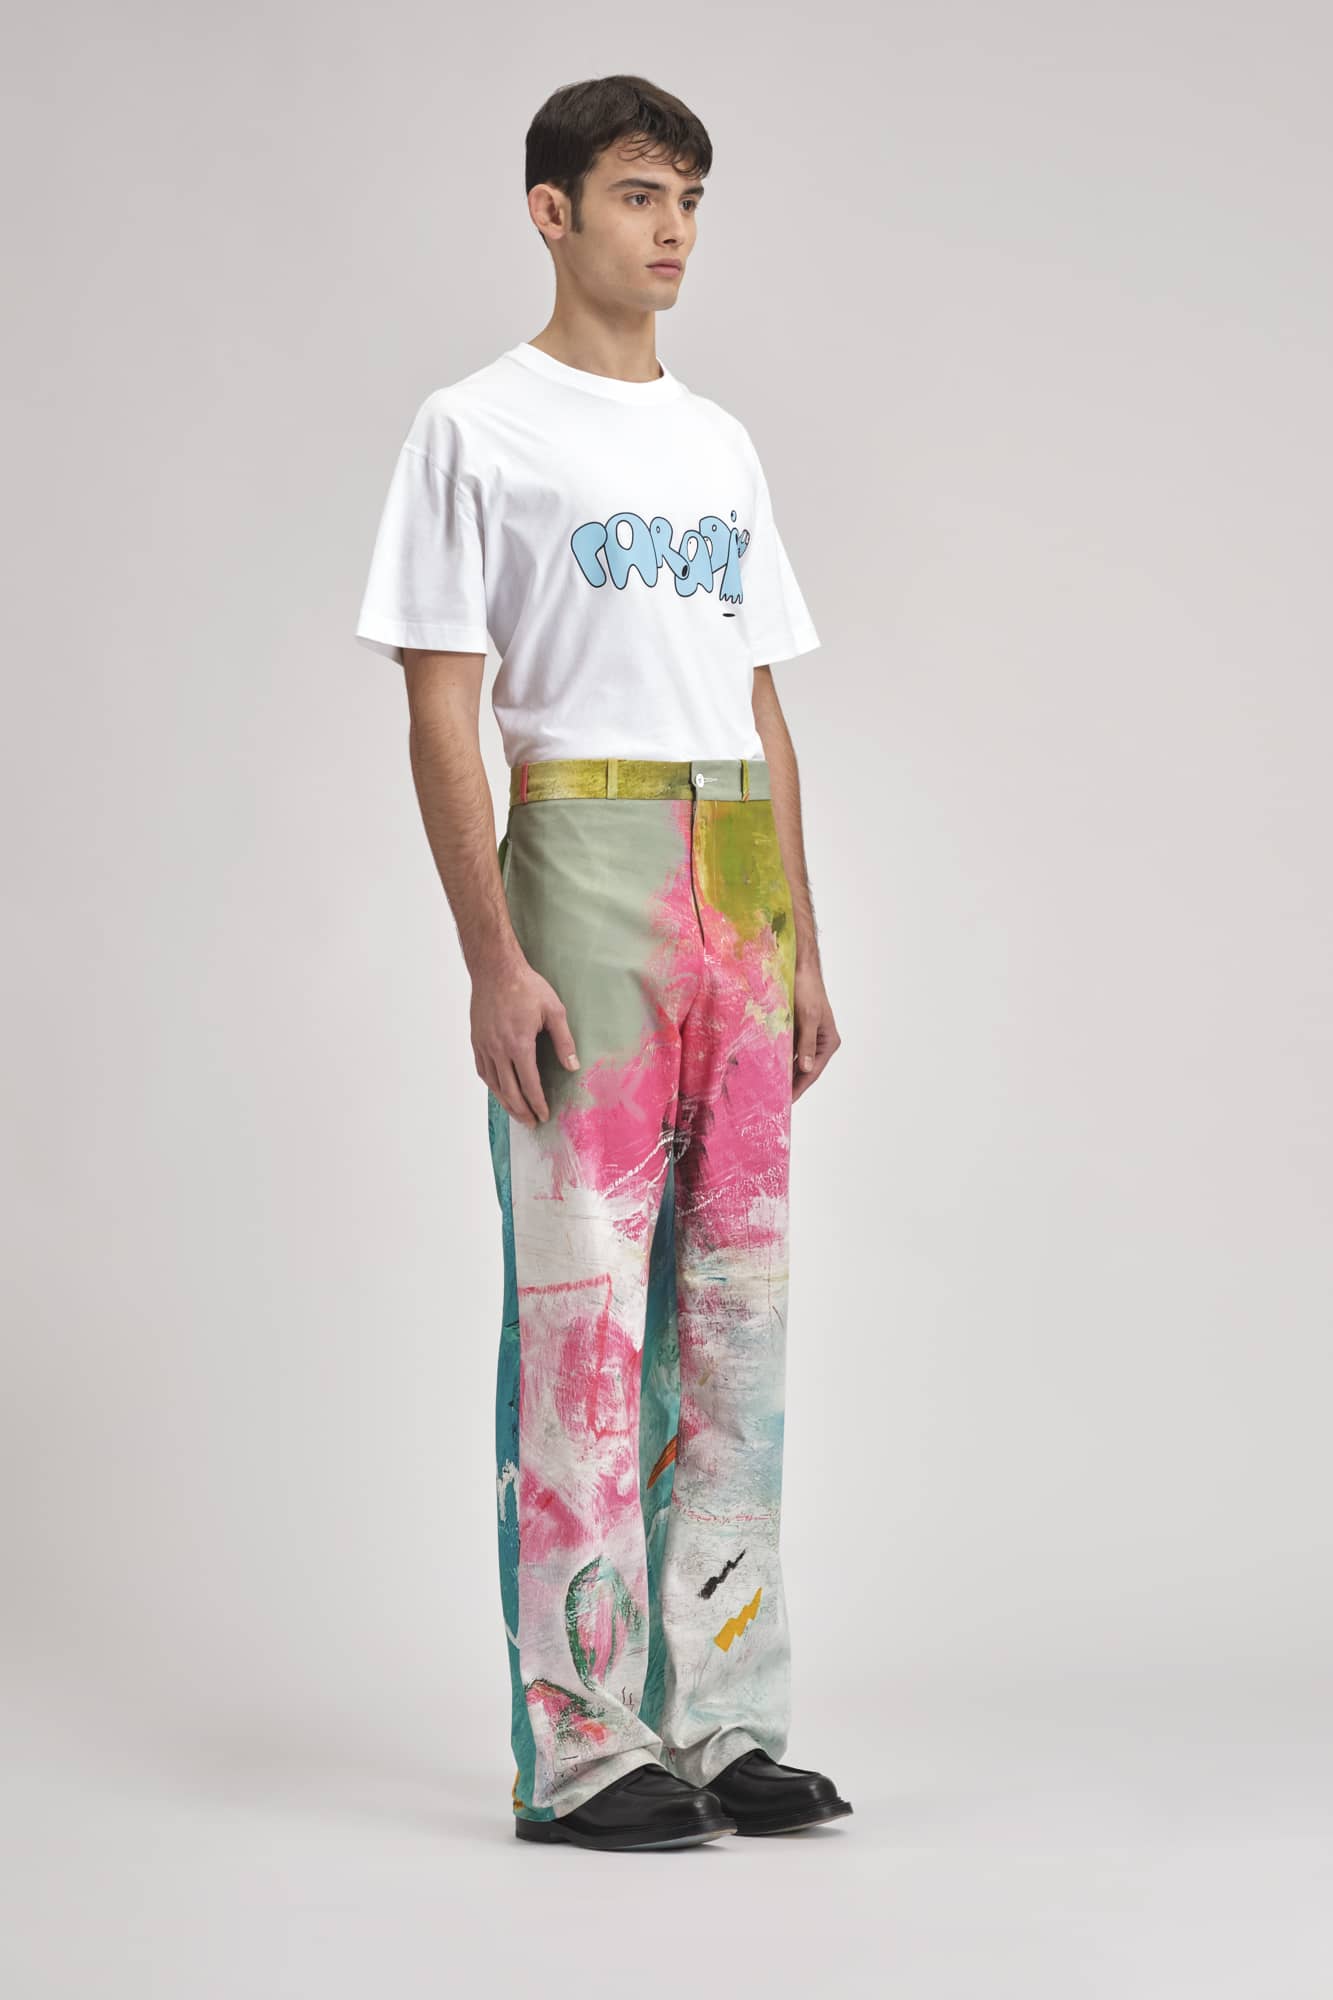 3.PARADIS & Edgar Plans : Multi Coloured Trousers